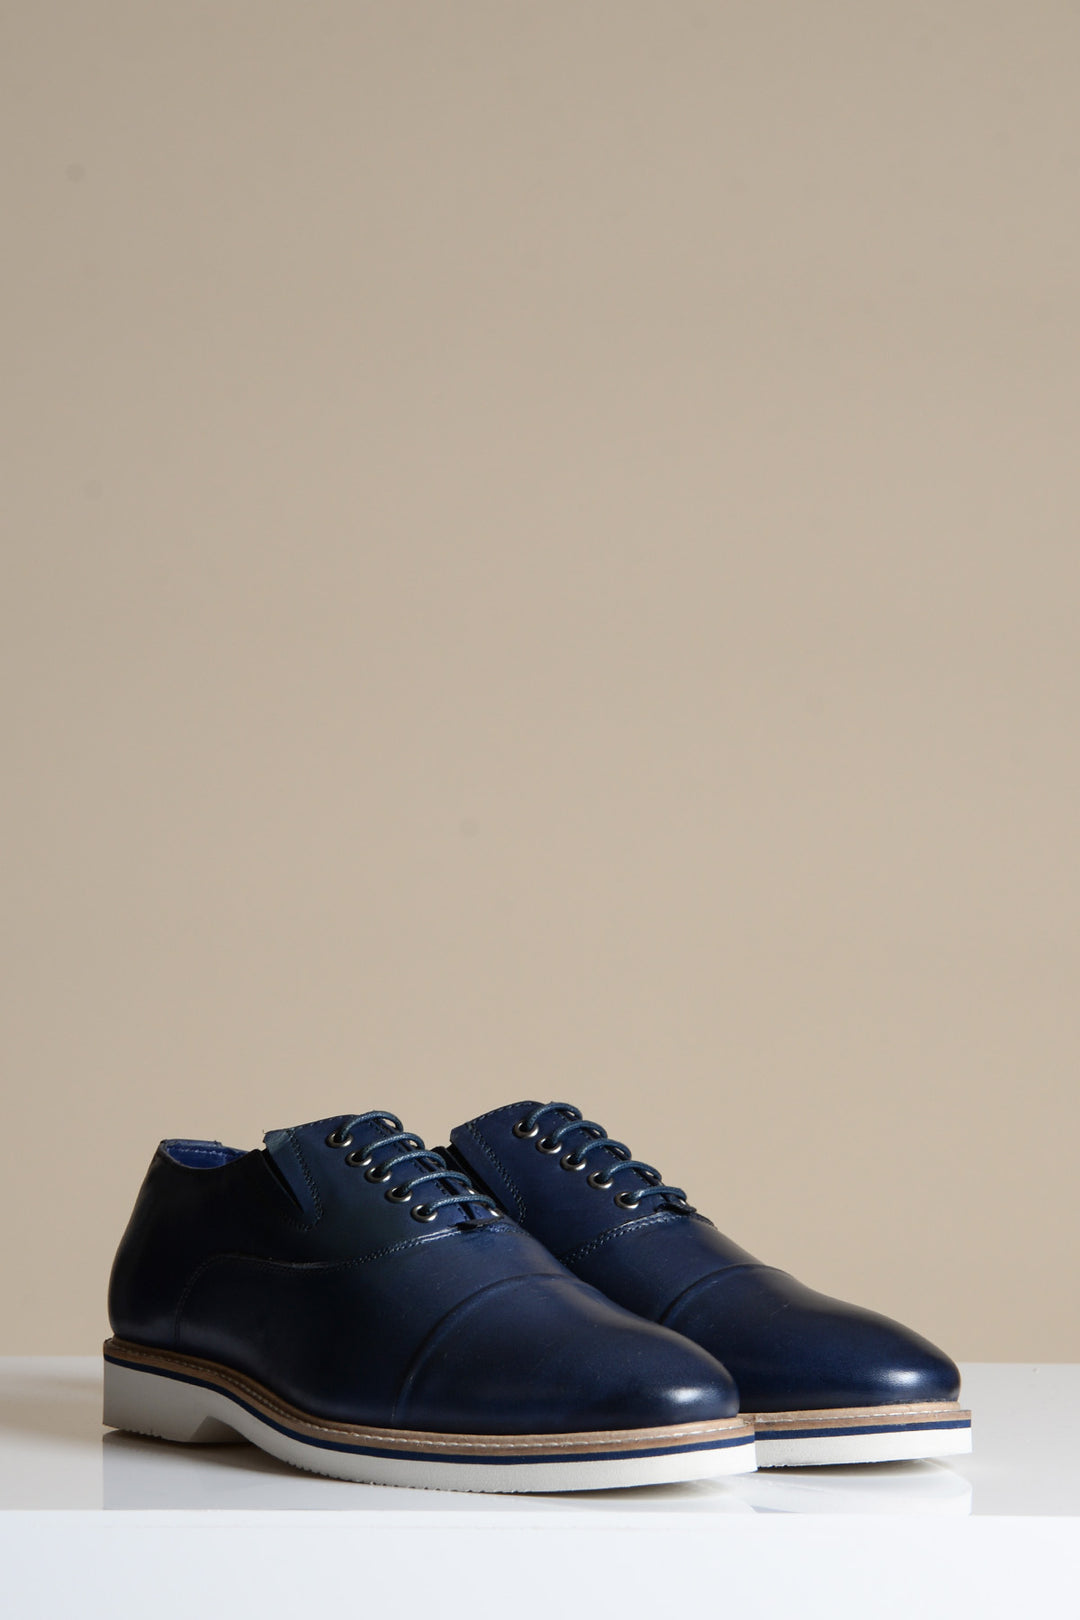 GAVIN - Navy Blue Leather Cap Toe Oxford Shoe